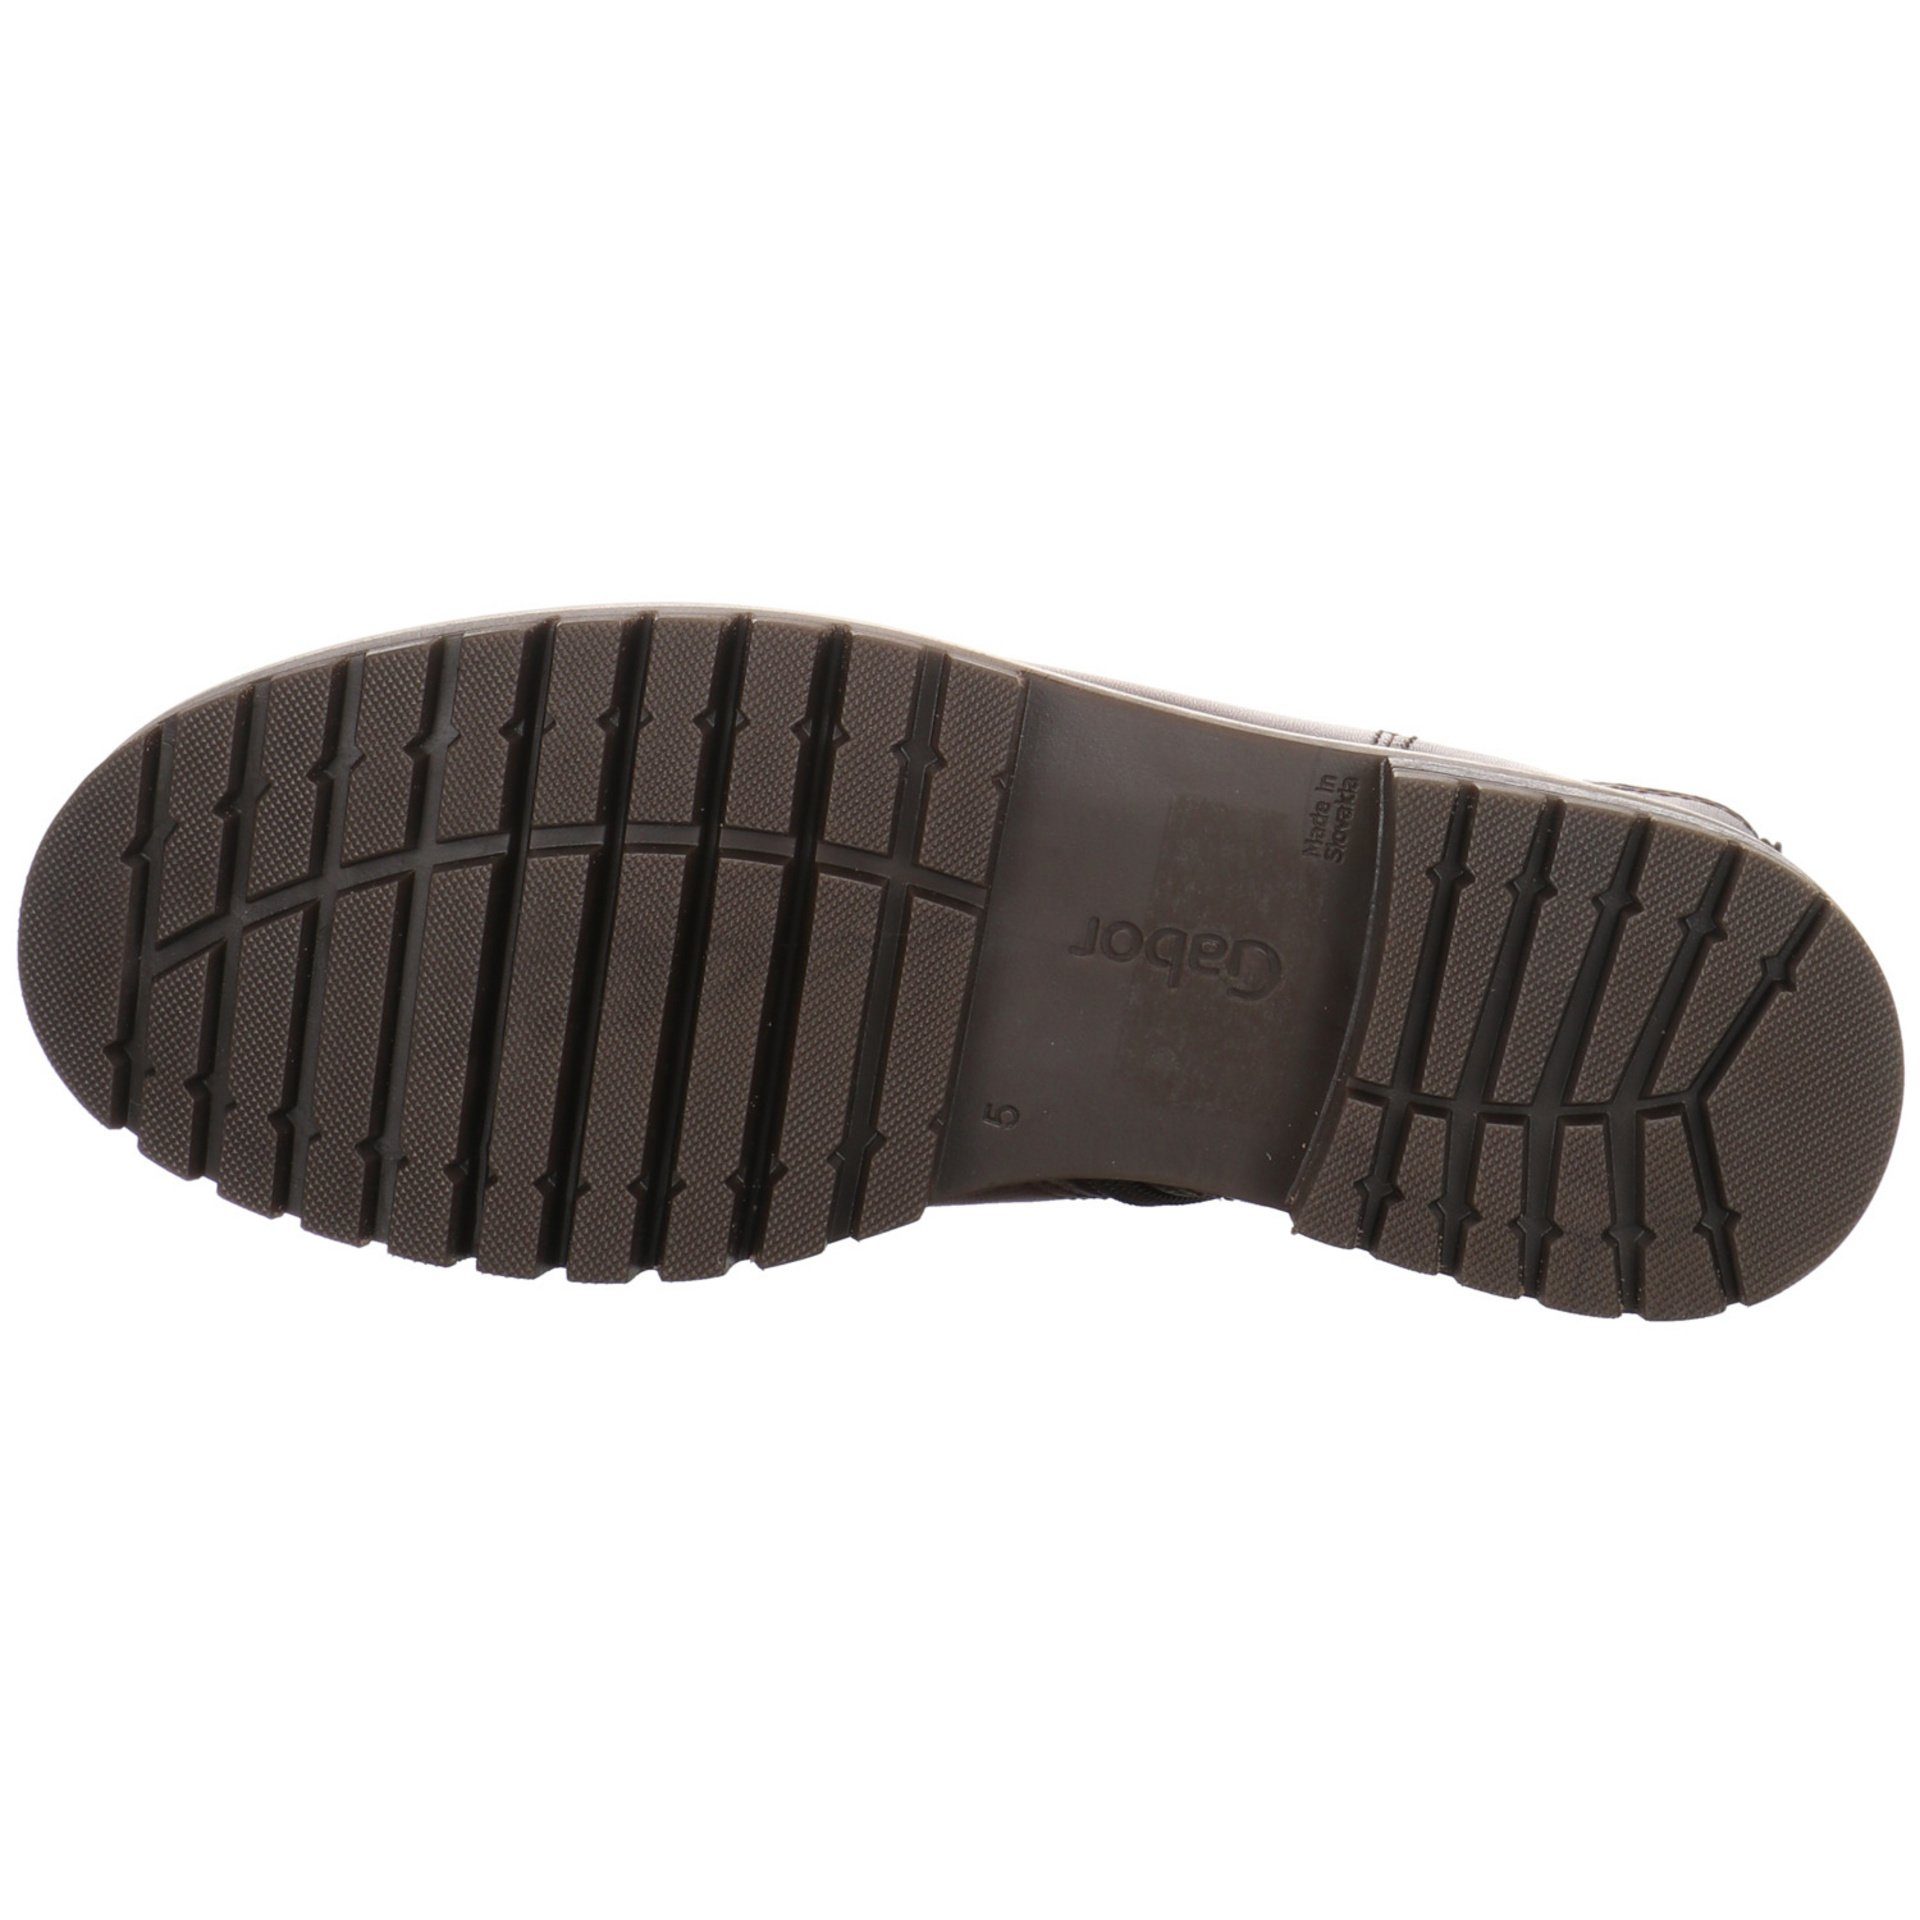 Gabor Damen Stiefel Leder-/Textilkombination sattel Boots Chelsea Stiefel (river) Schuhe